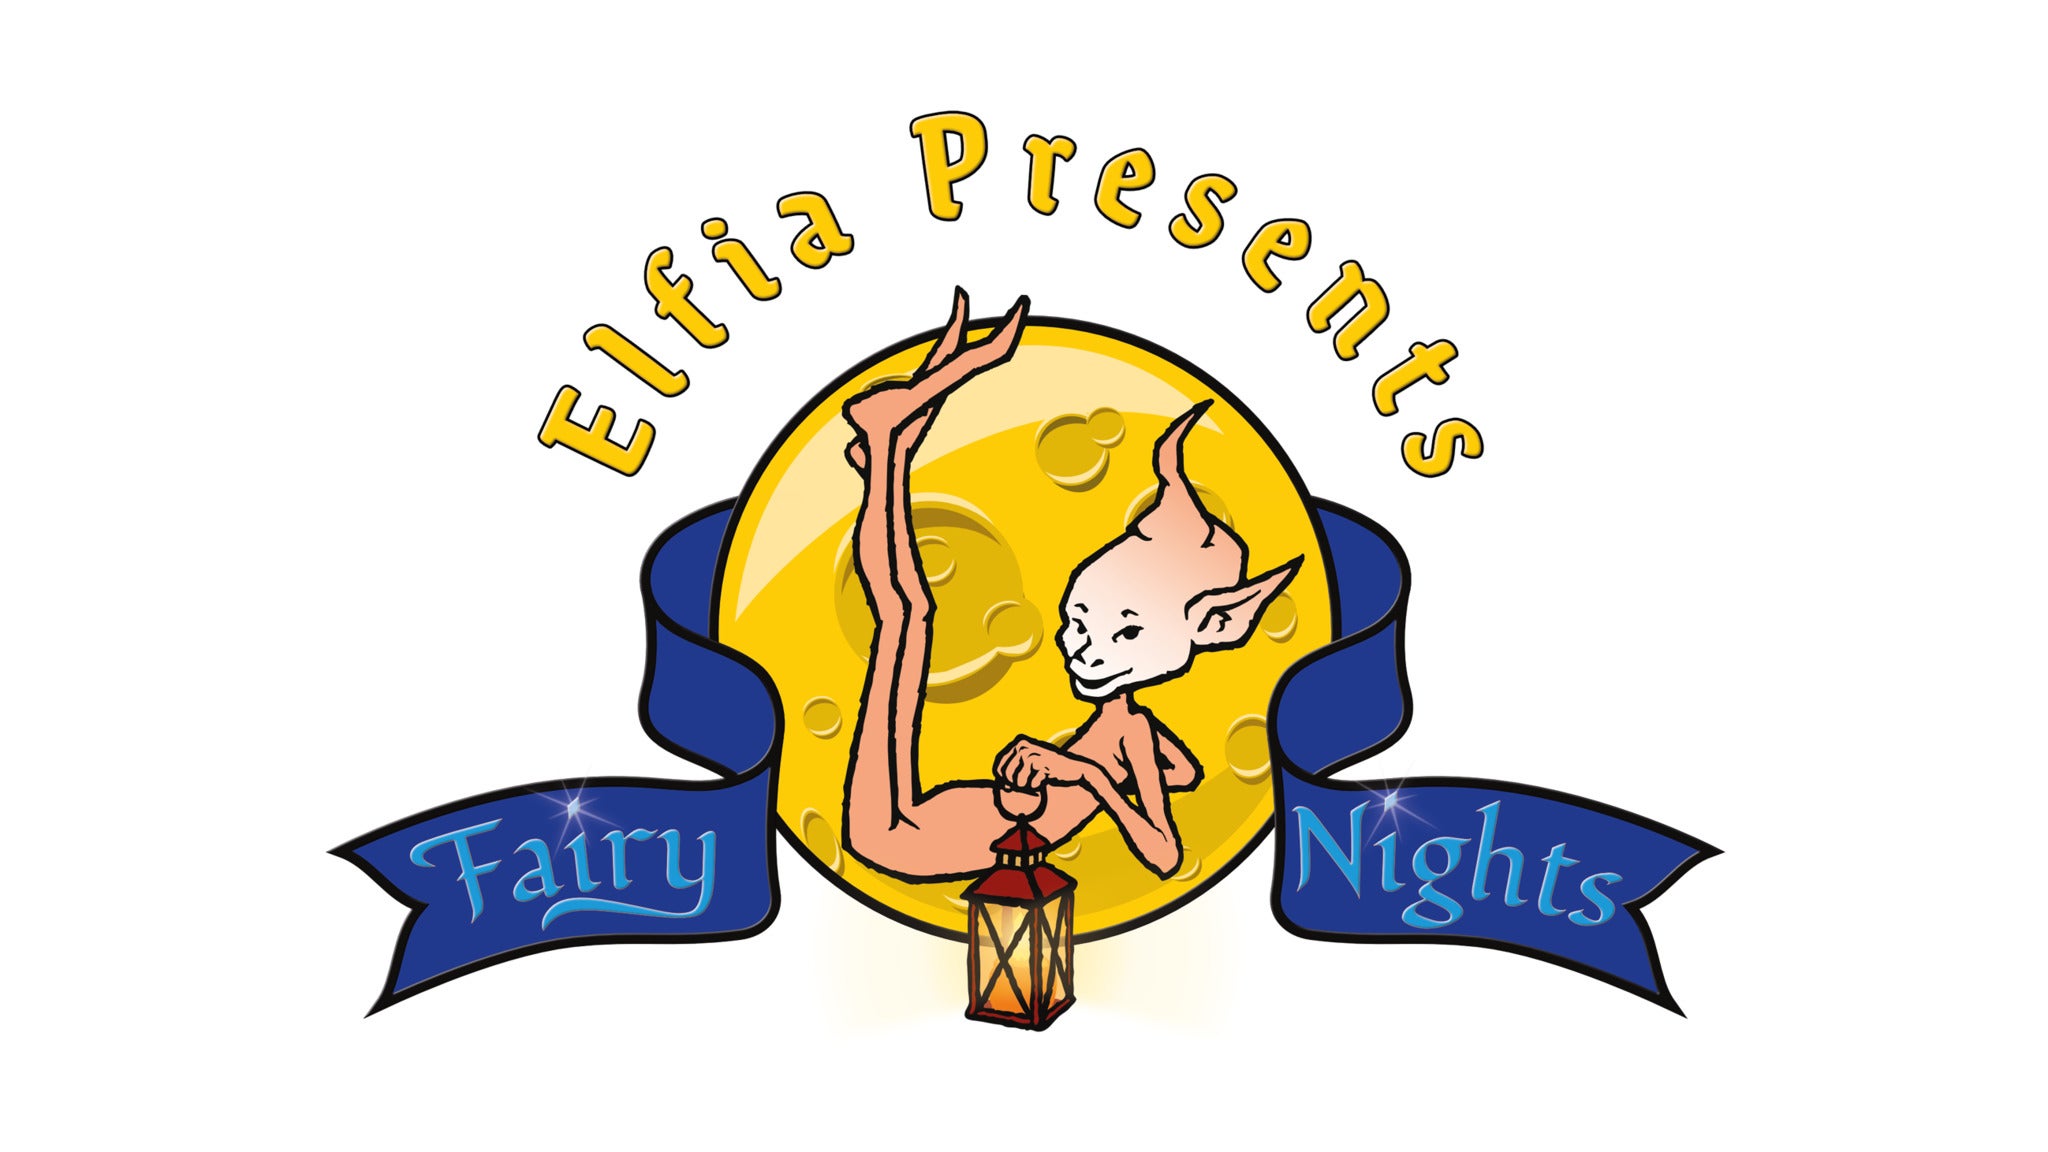 Elfia Presents: Fairy Nights Haarzuilens 2021 (Time slot 18:00-18:30)